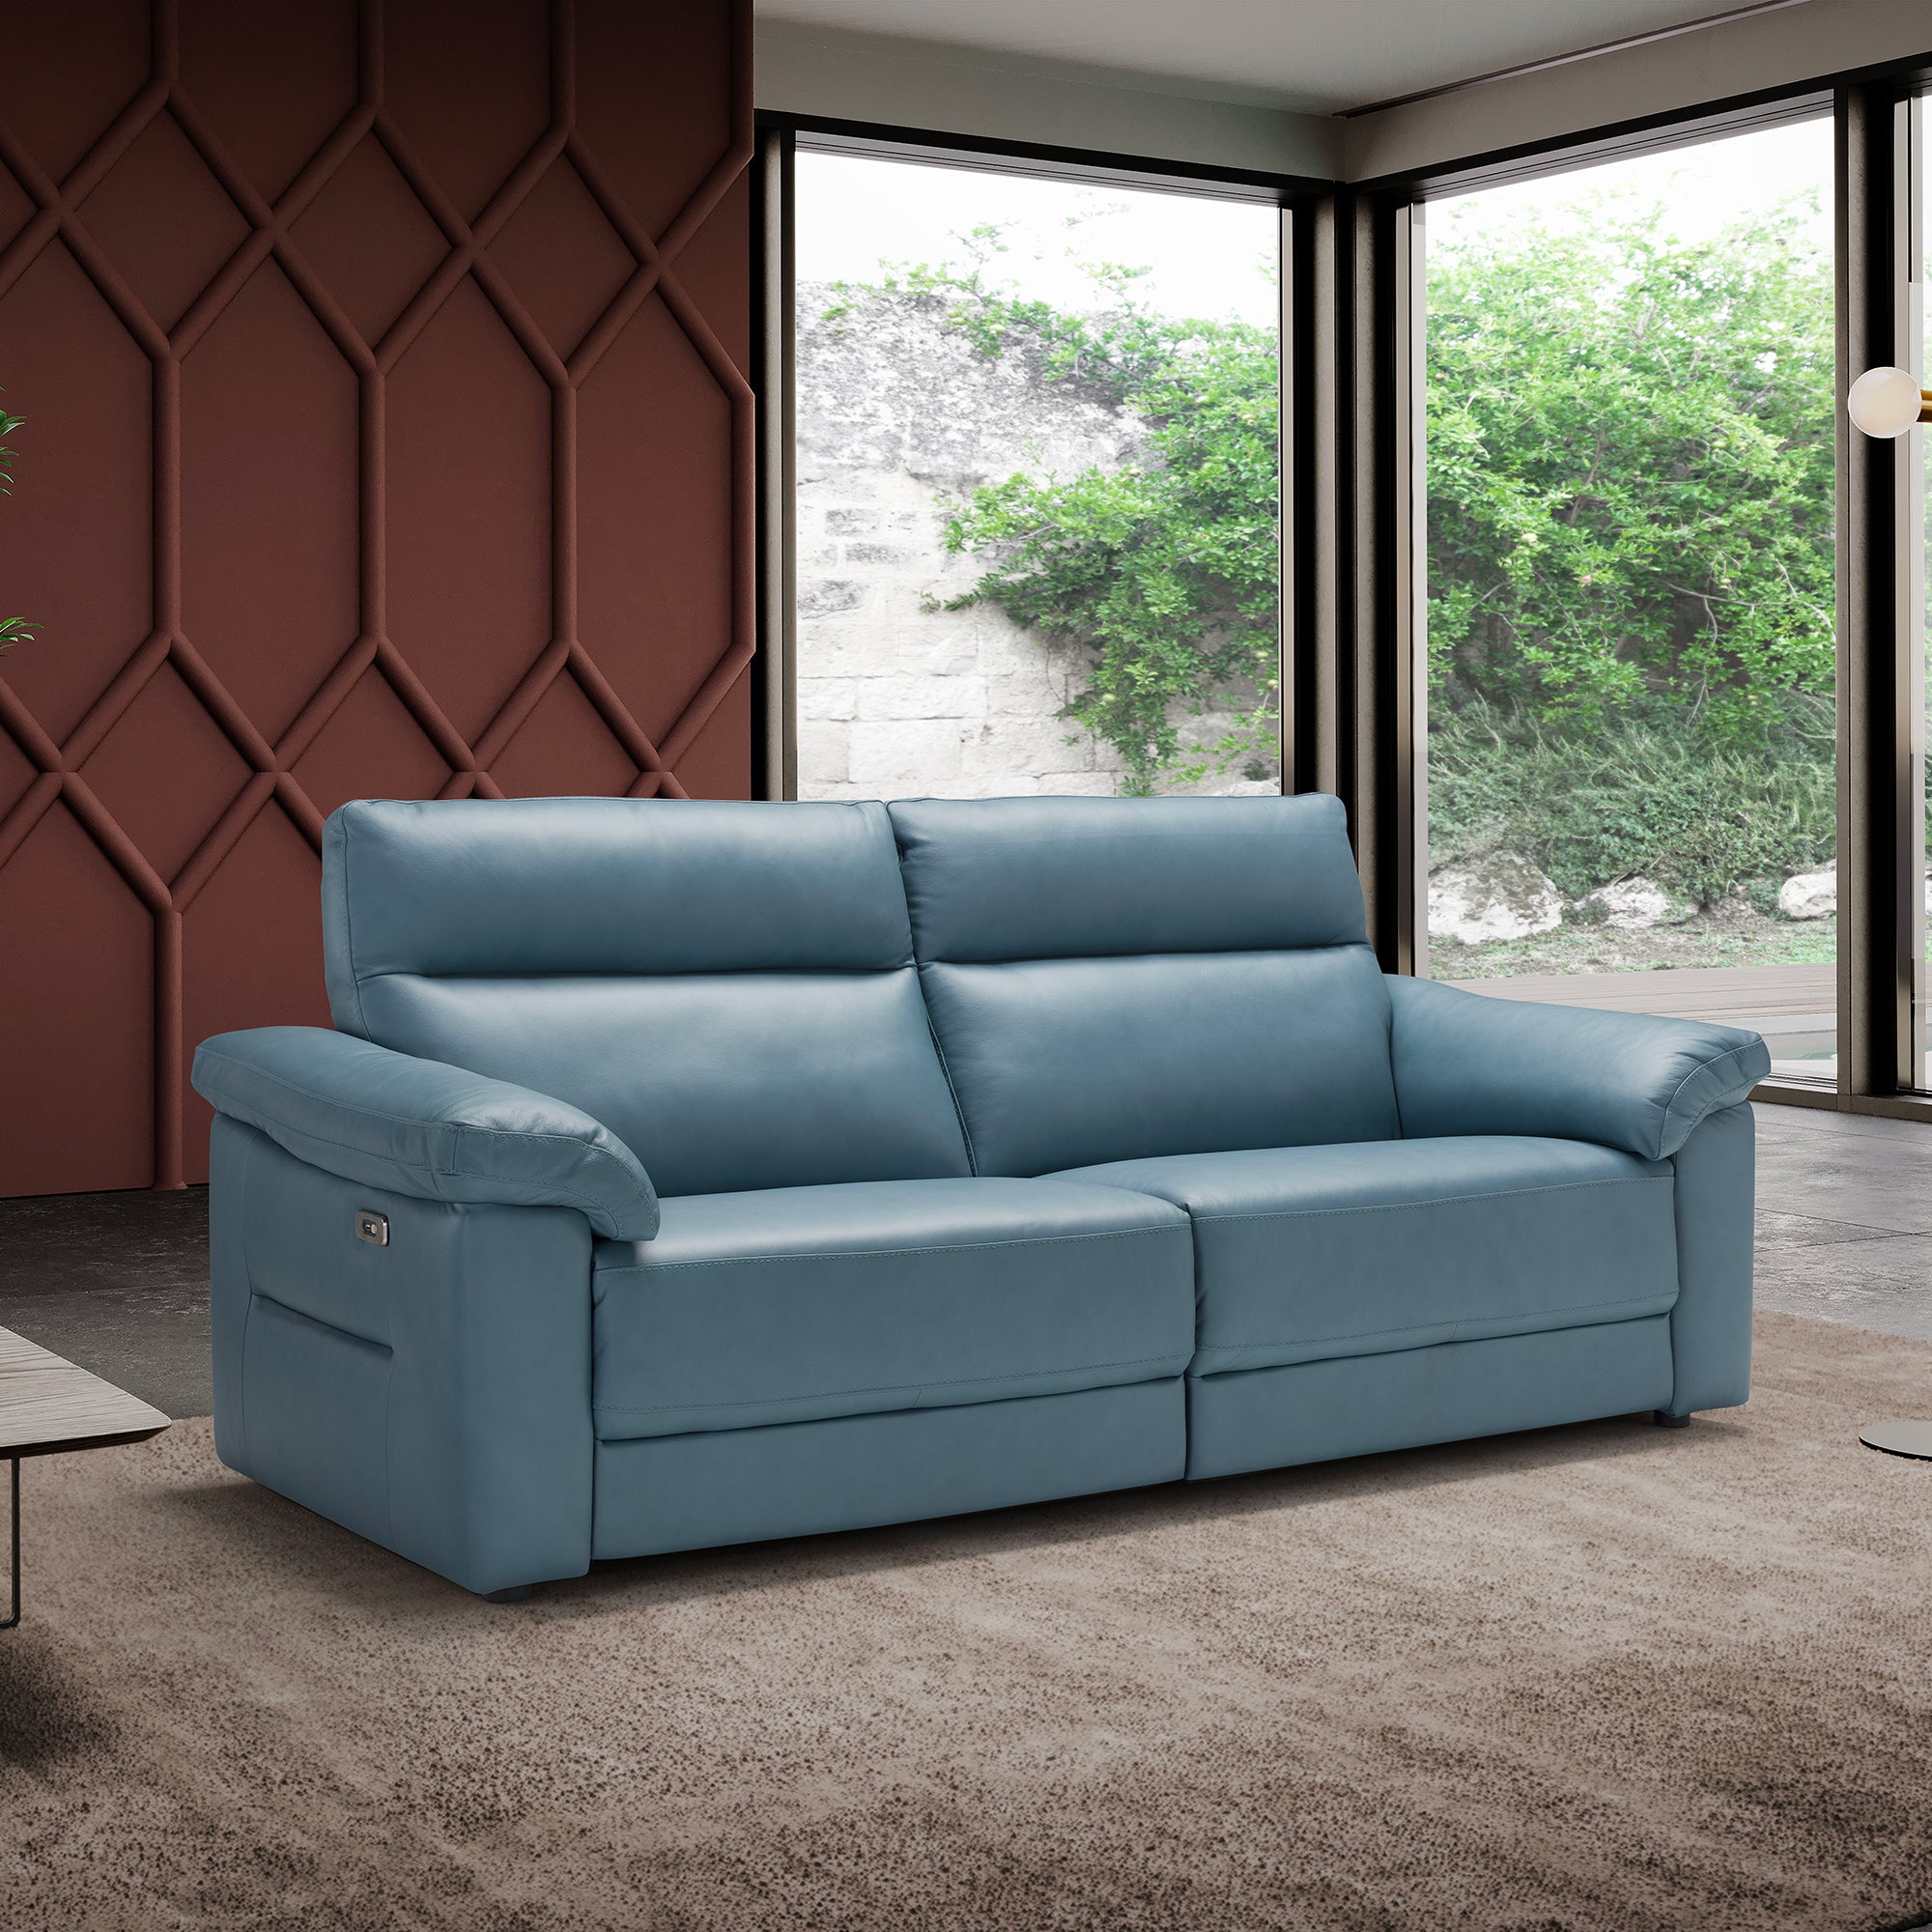 Fiorano - 2 Seat Maxi Sofa In Fabric Or Leather Leather Cat B